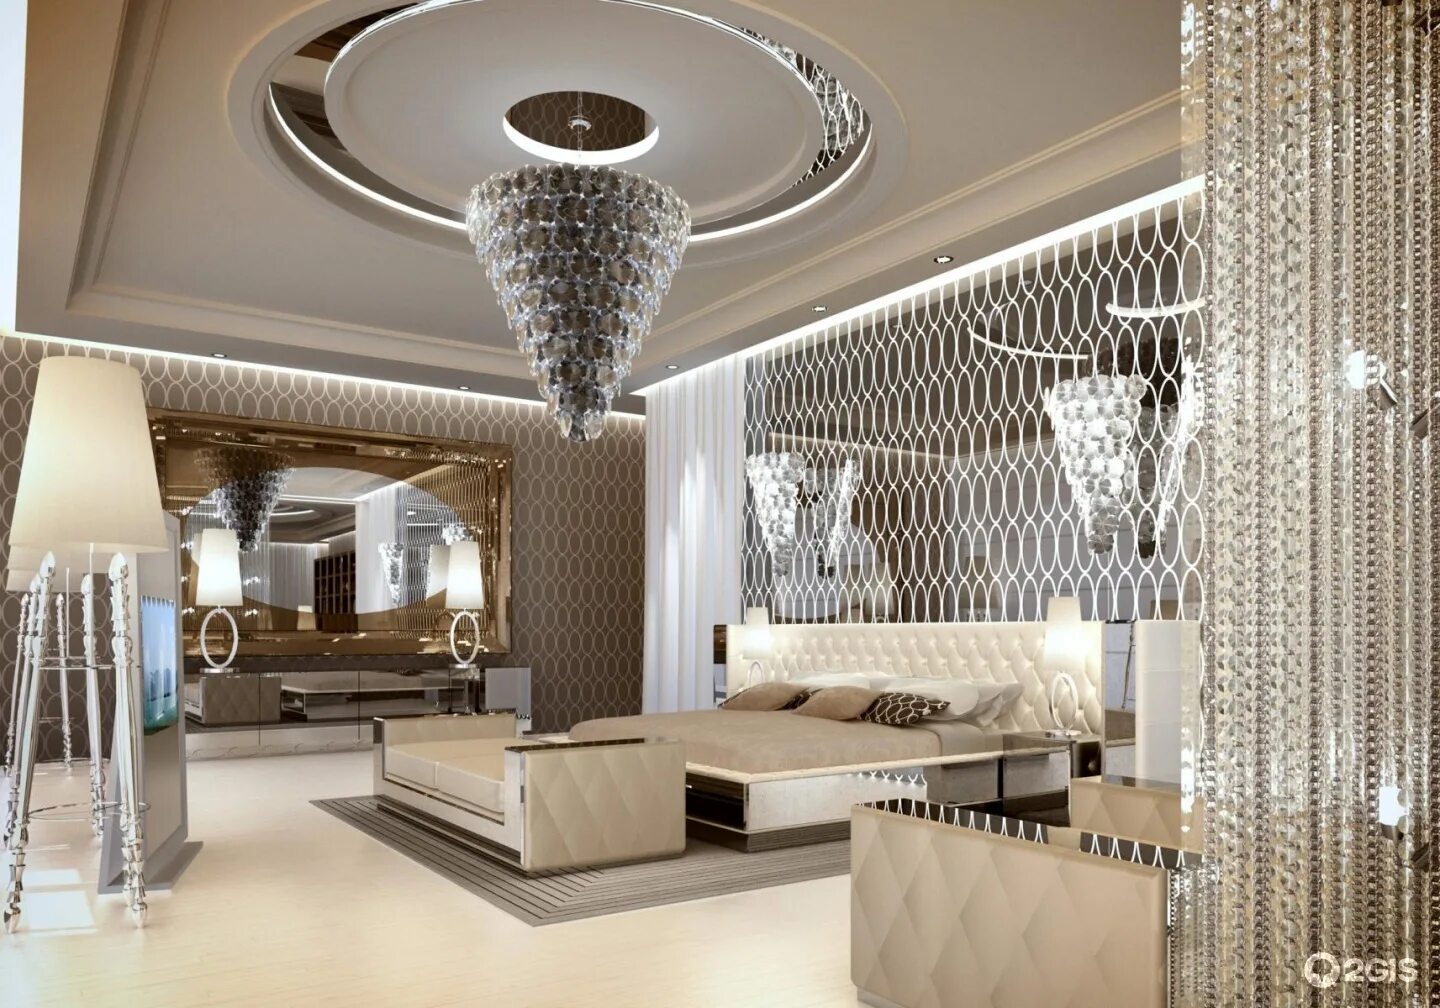 Luxury interior